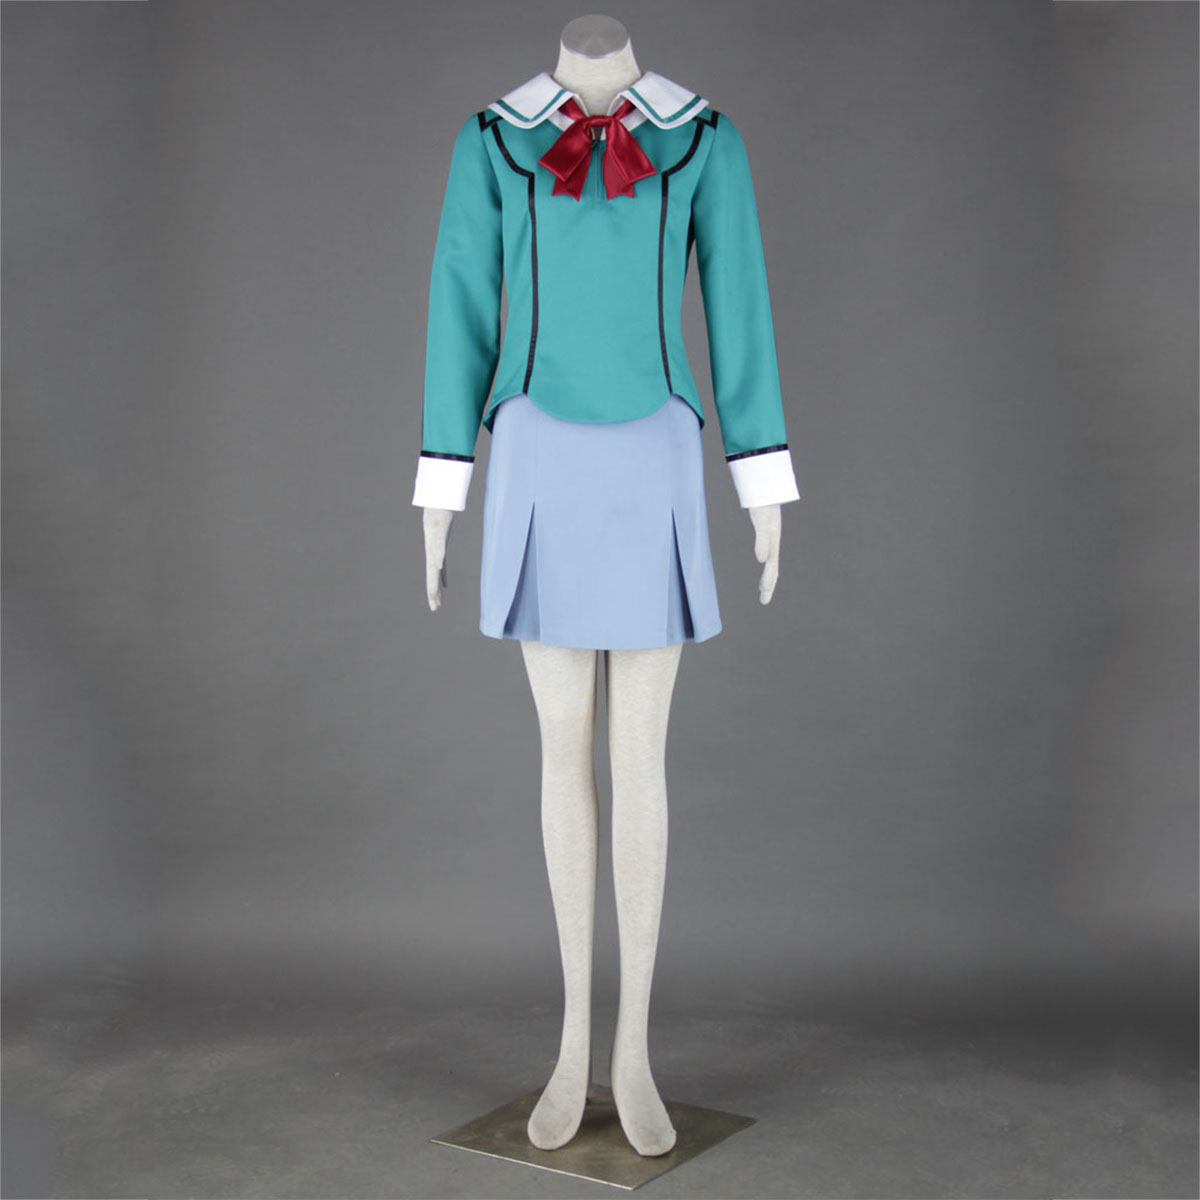 Bakuman Female School Uniform Cosplay Costumes AU